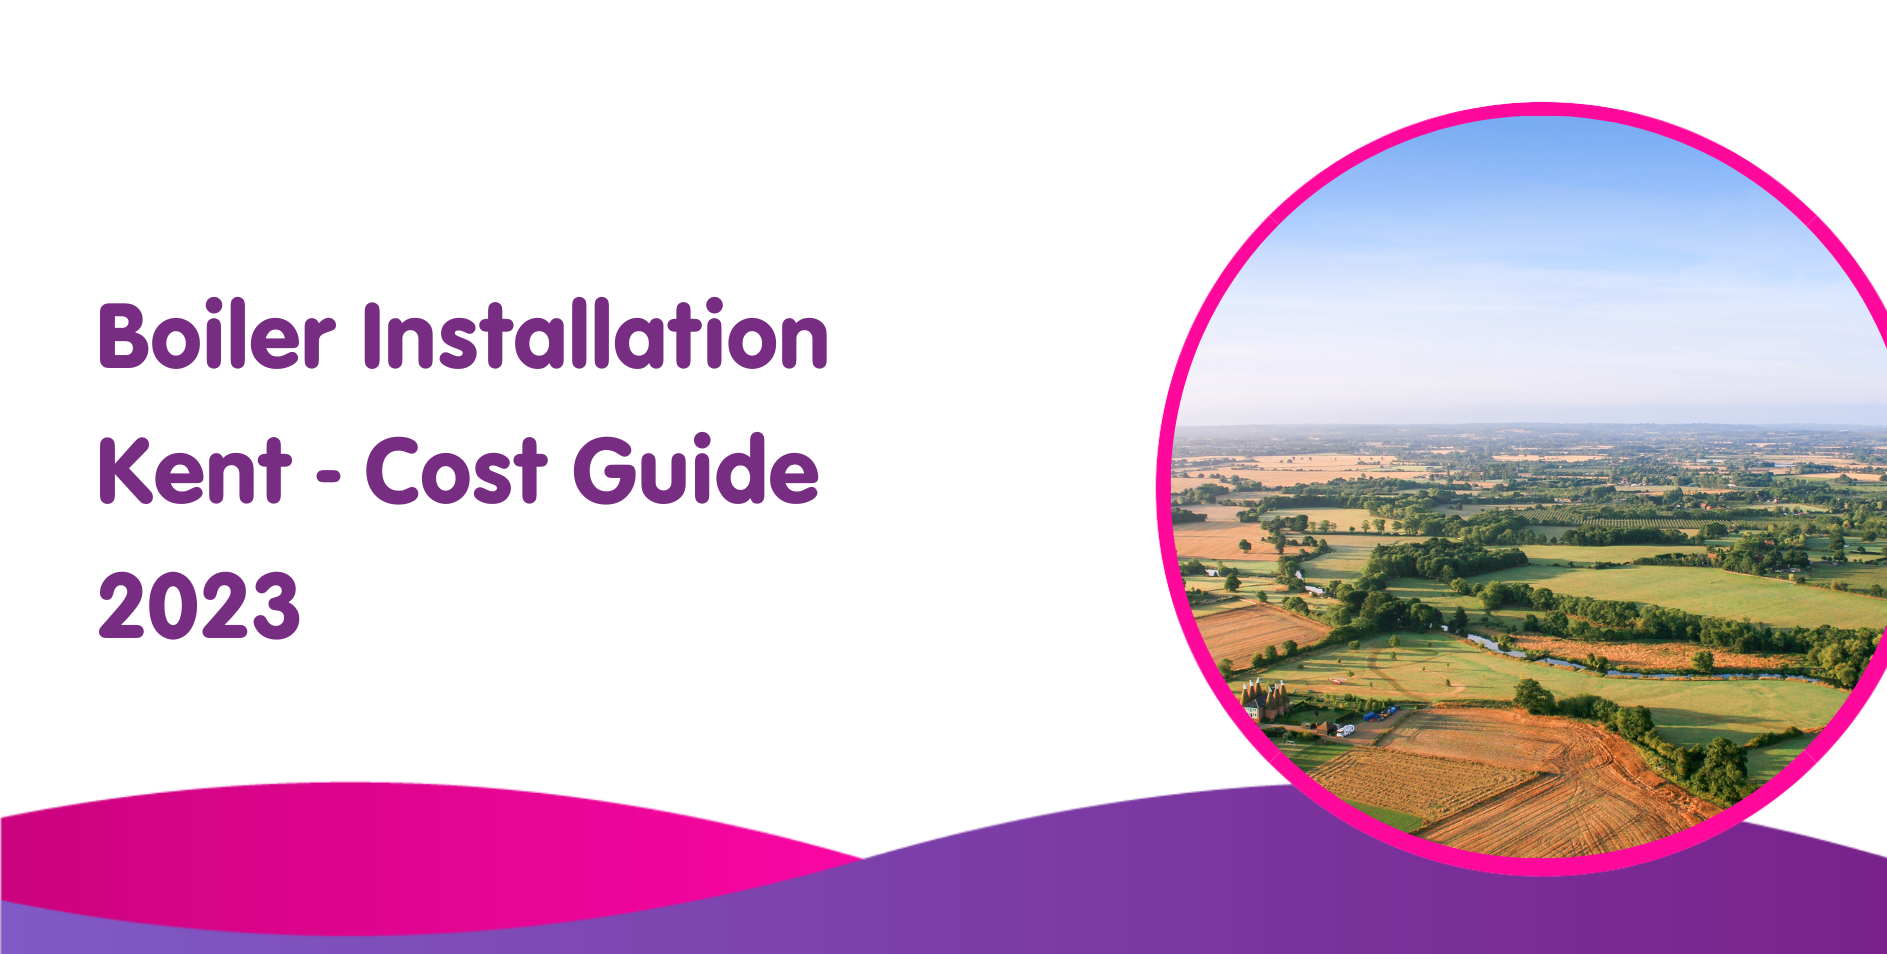 Boiler Installation Kent - Cost Guide 2023